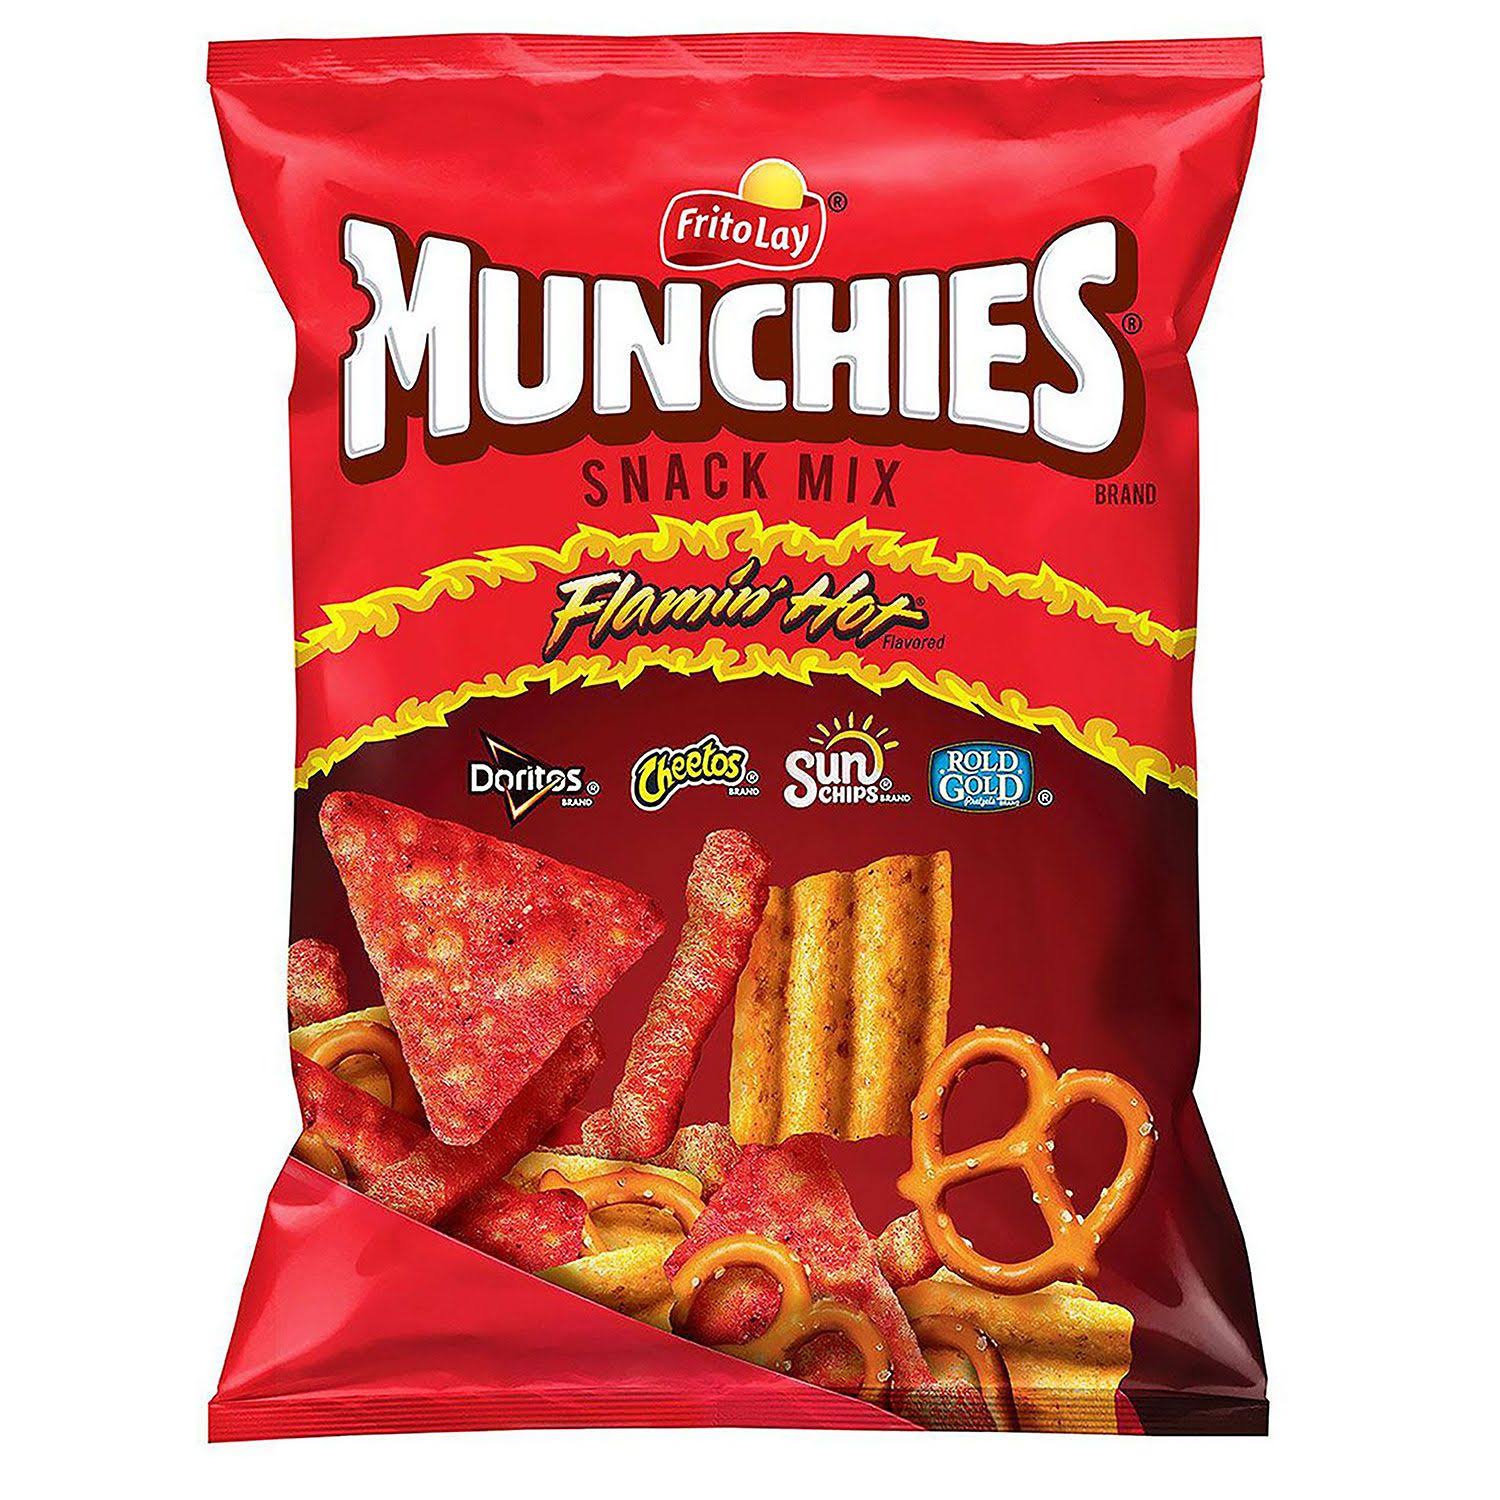 Munchies Flamin' Hot Snack Mix - 3oz